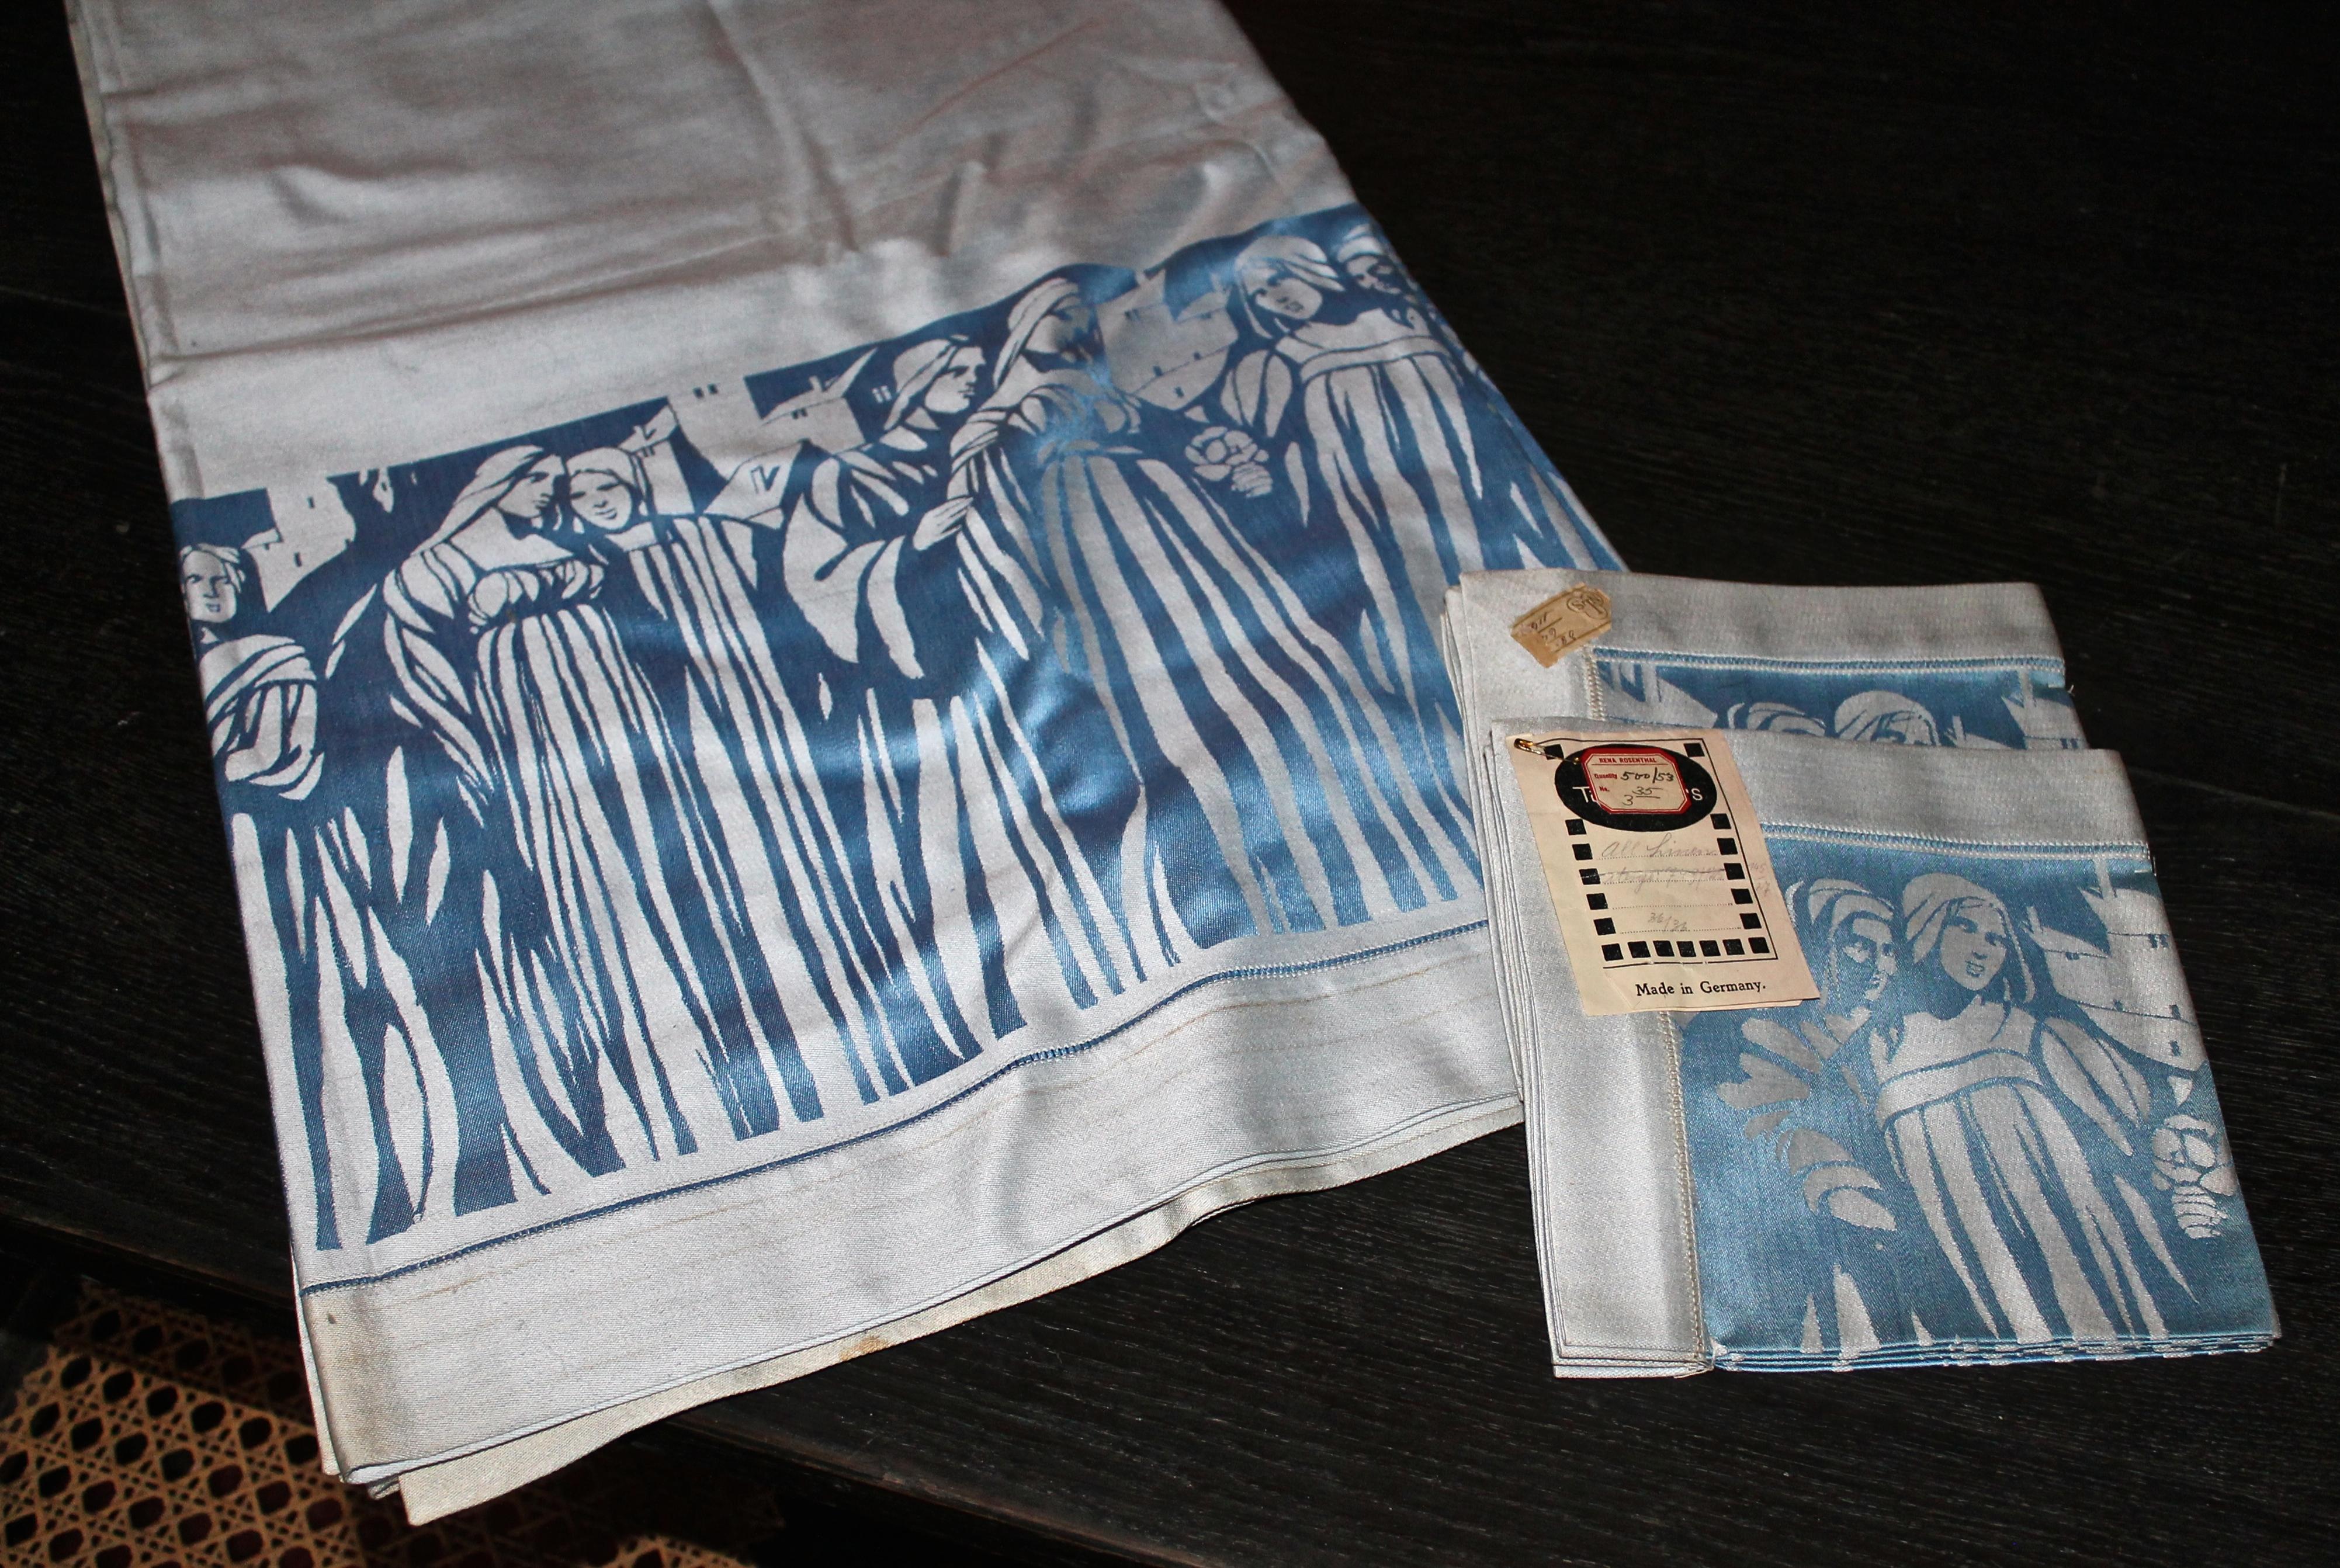 Ferdinand Nigg designed tablecloth (6'6